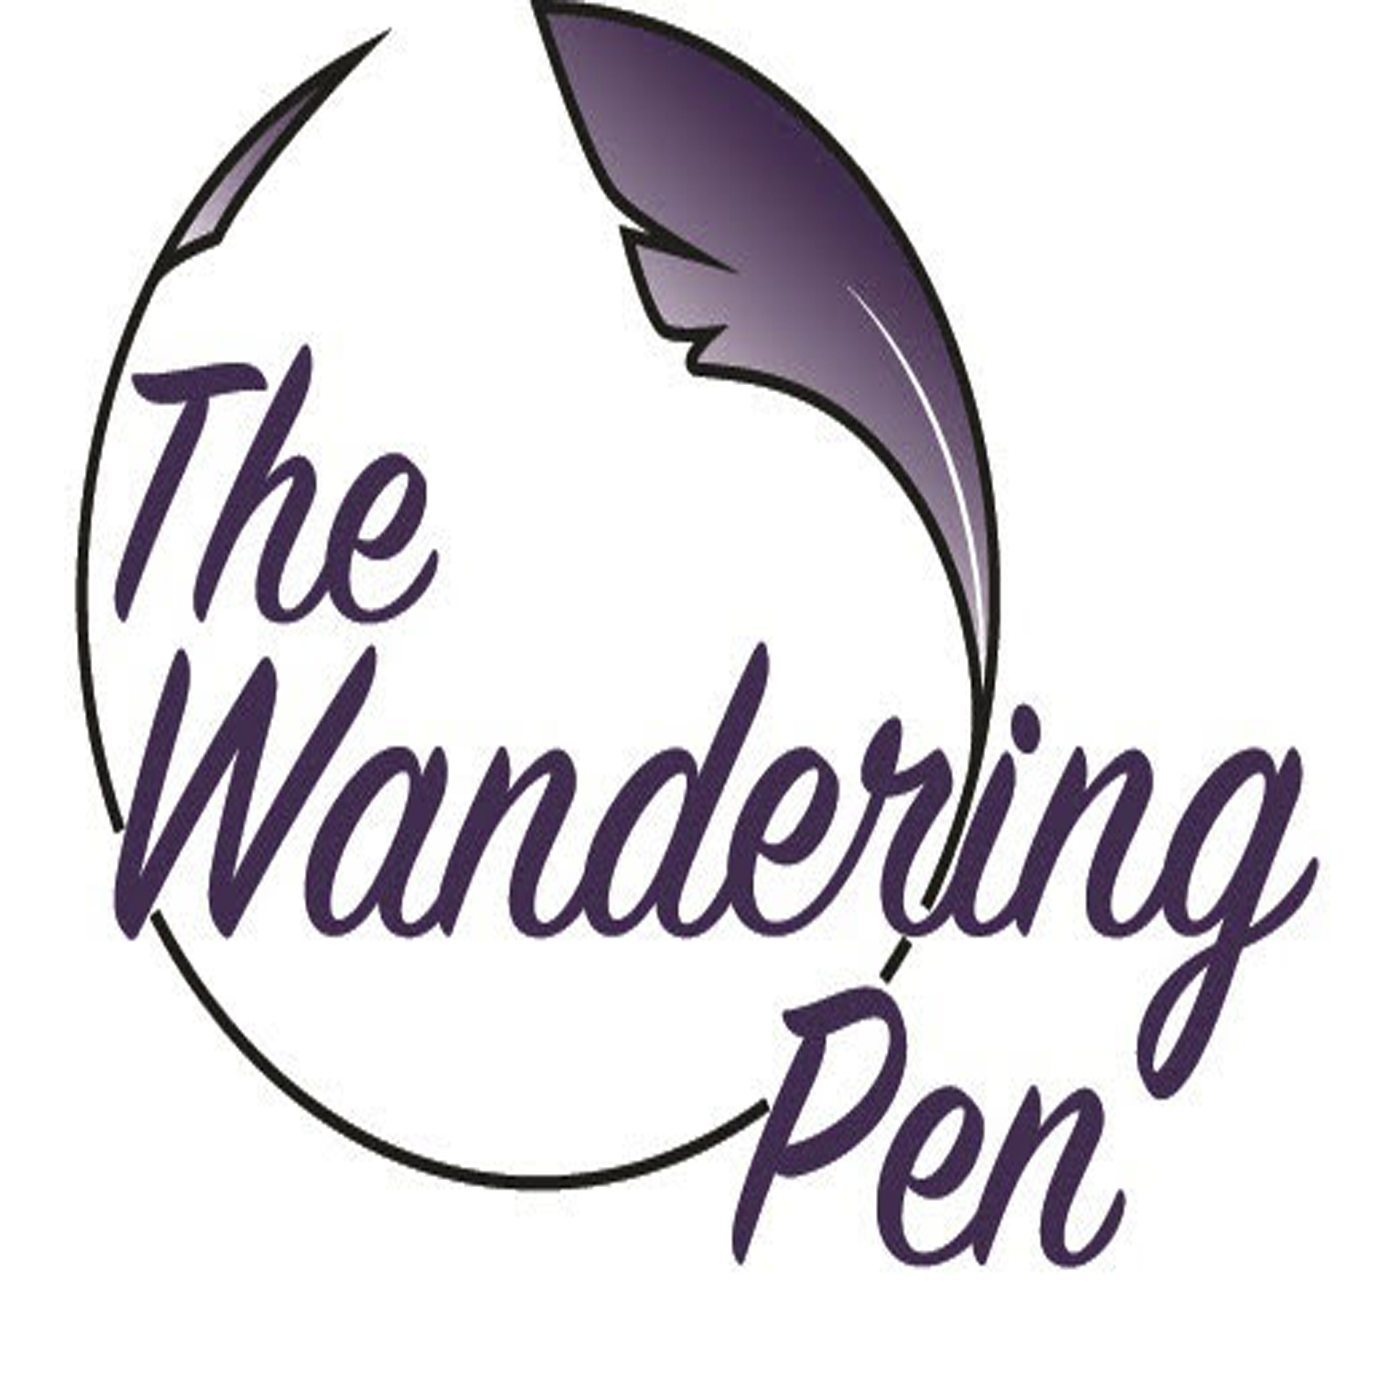 The Wandering Pen